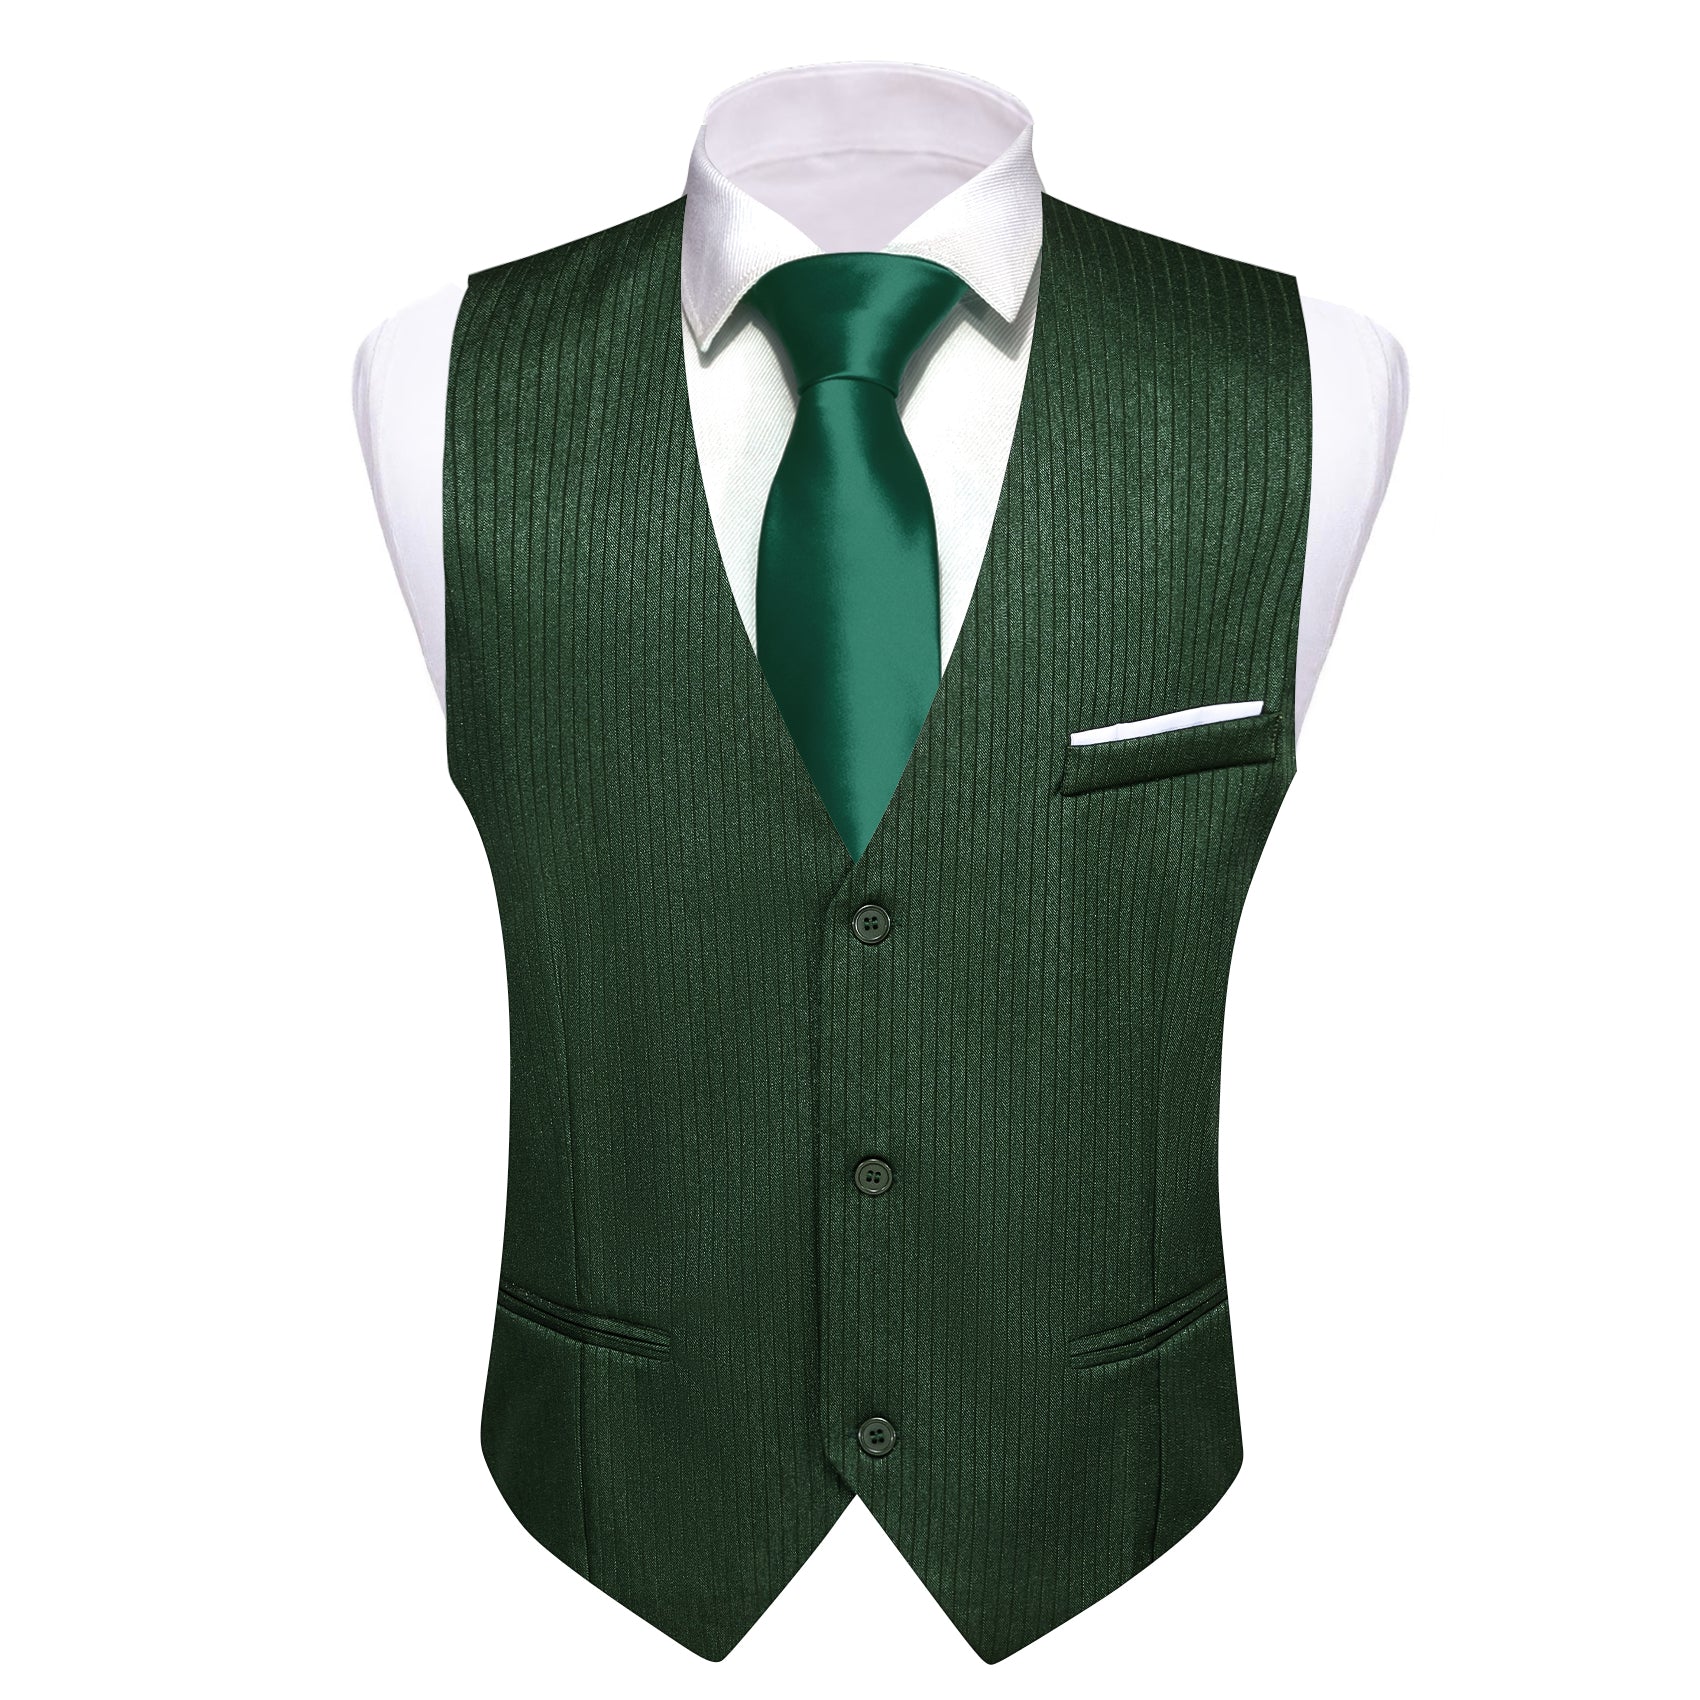 Barry.wang Dark Green Solid Business Vest Suit